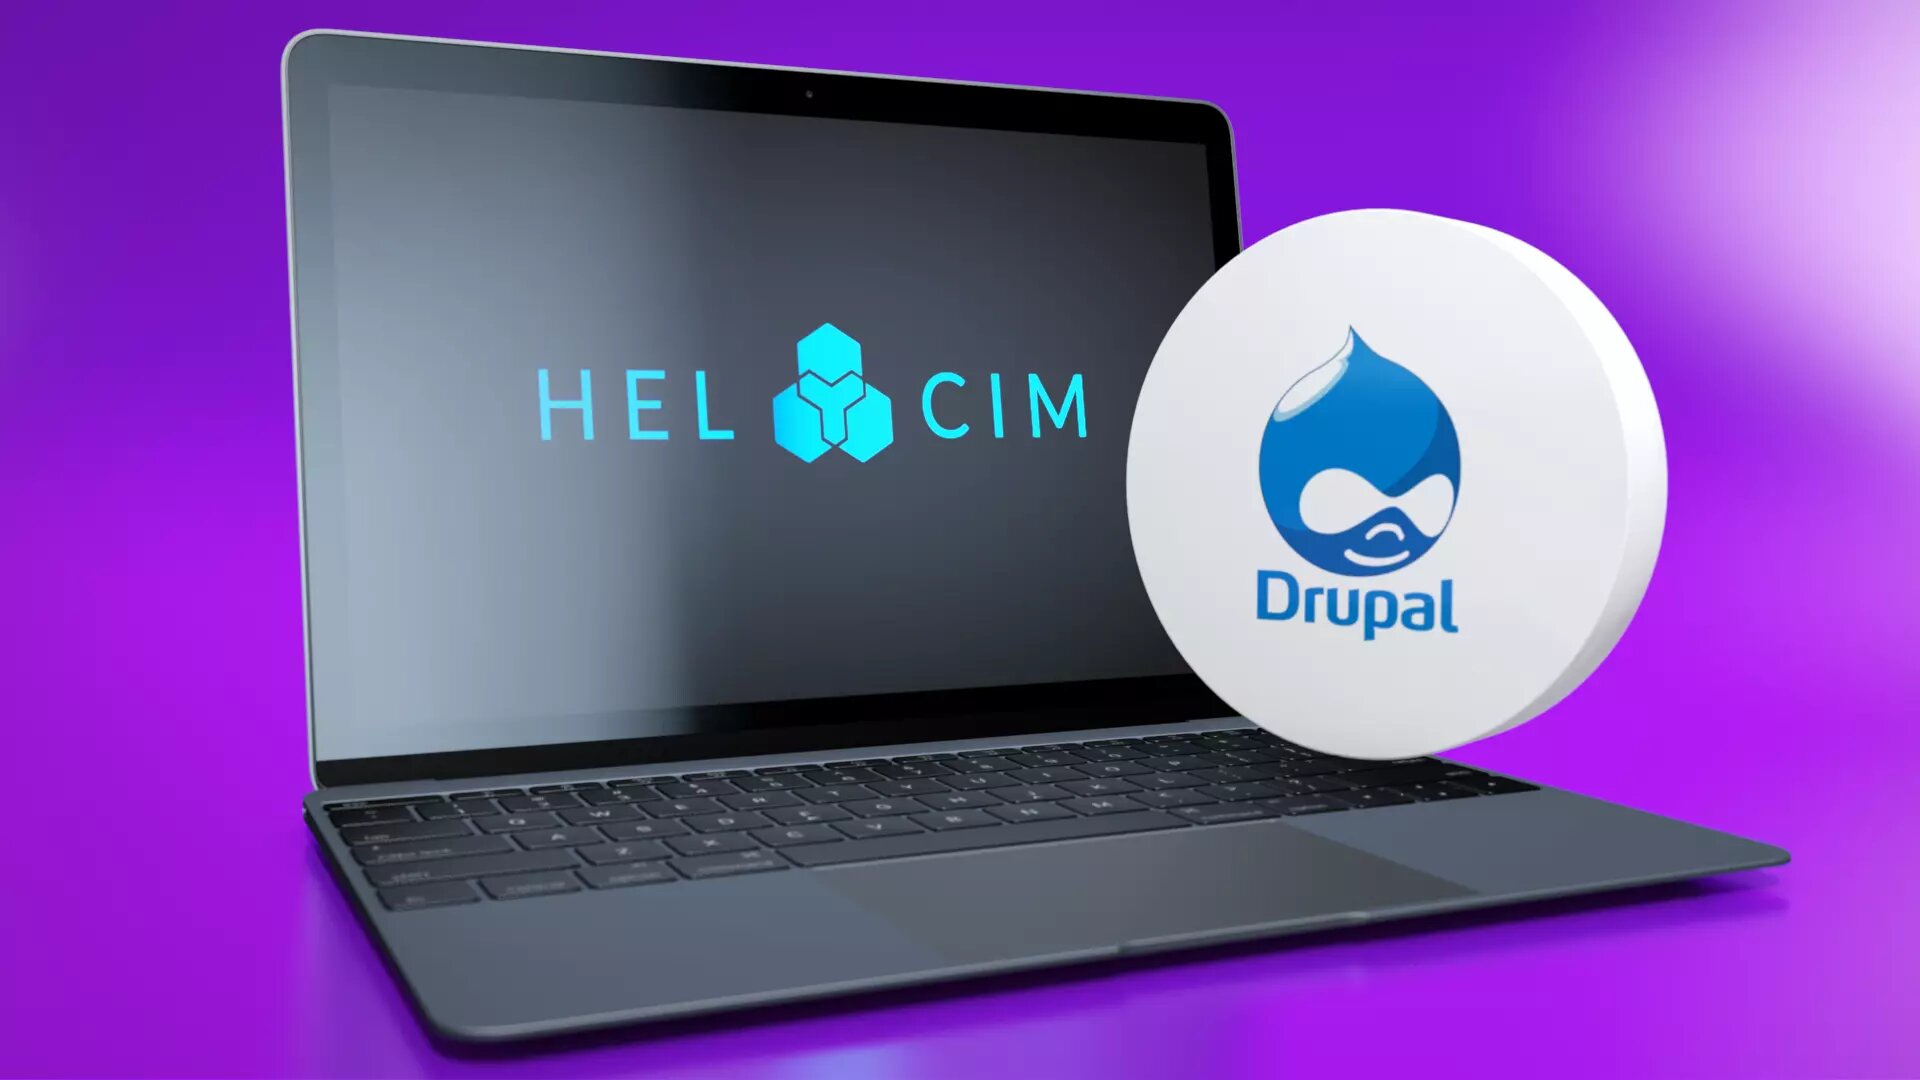 Drupal's logo side by side with Helcim's logo